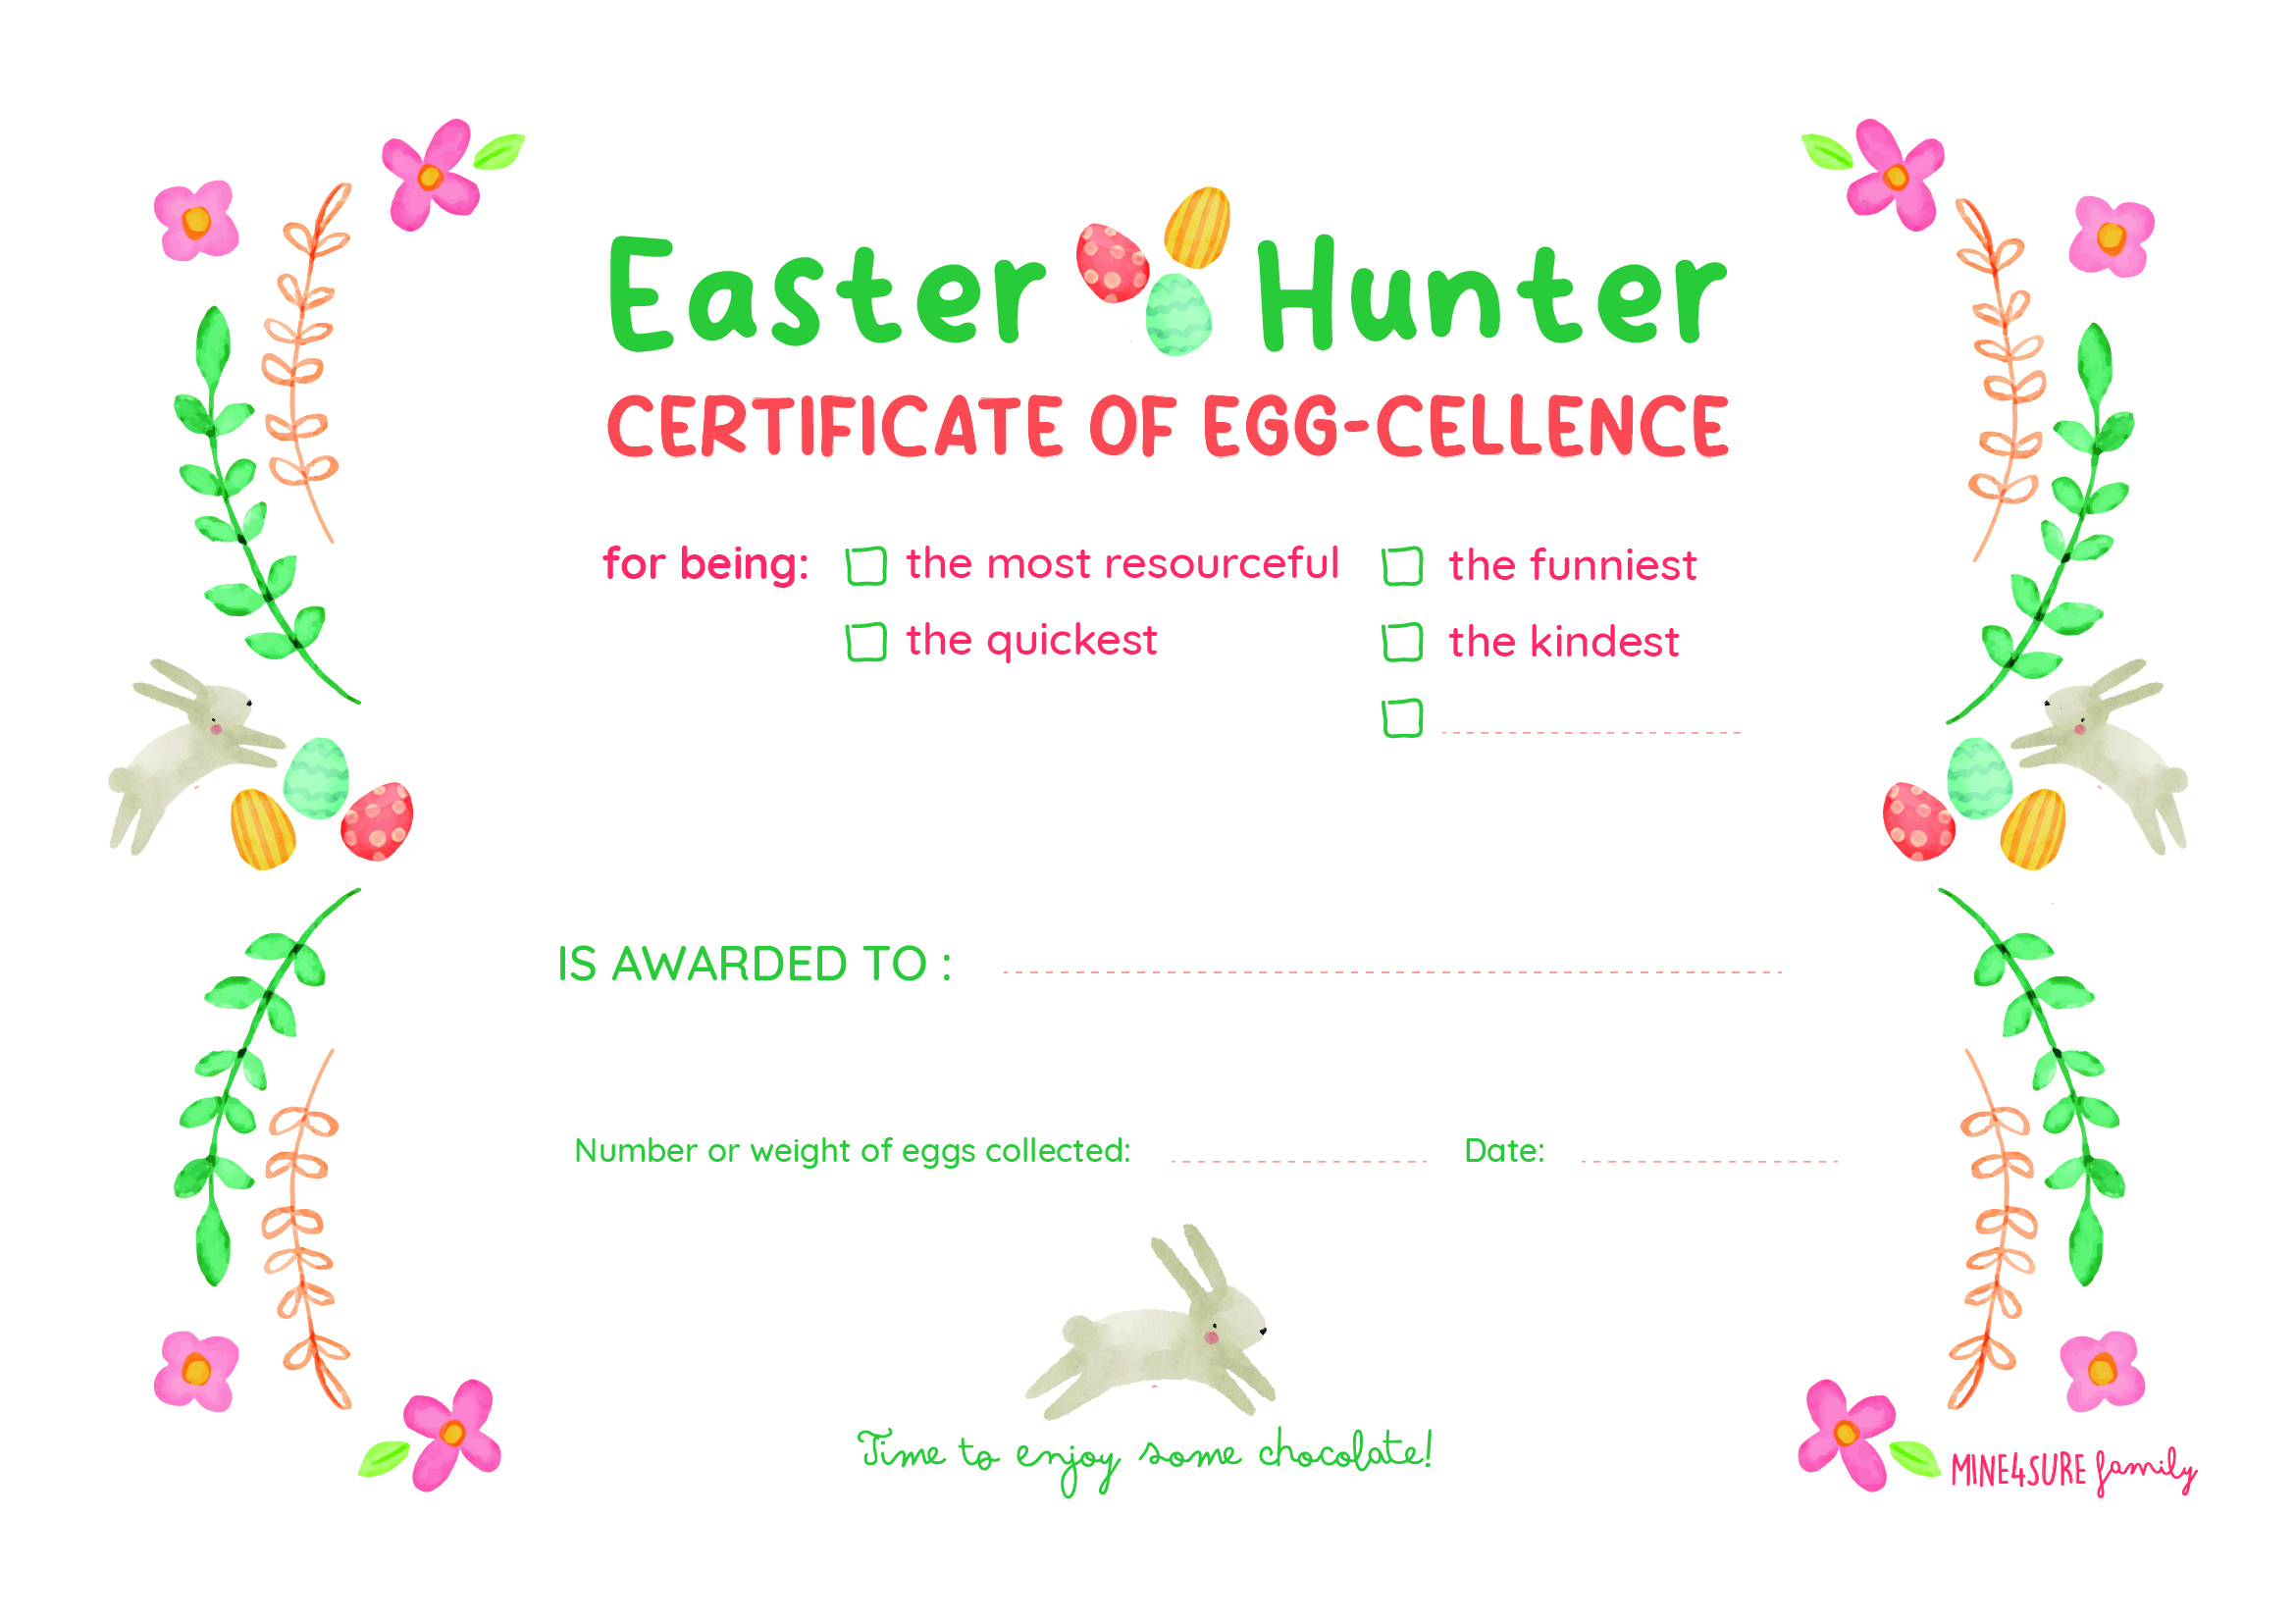 Certificate of Egg-Cellence for Easter Egg hunting champions